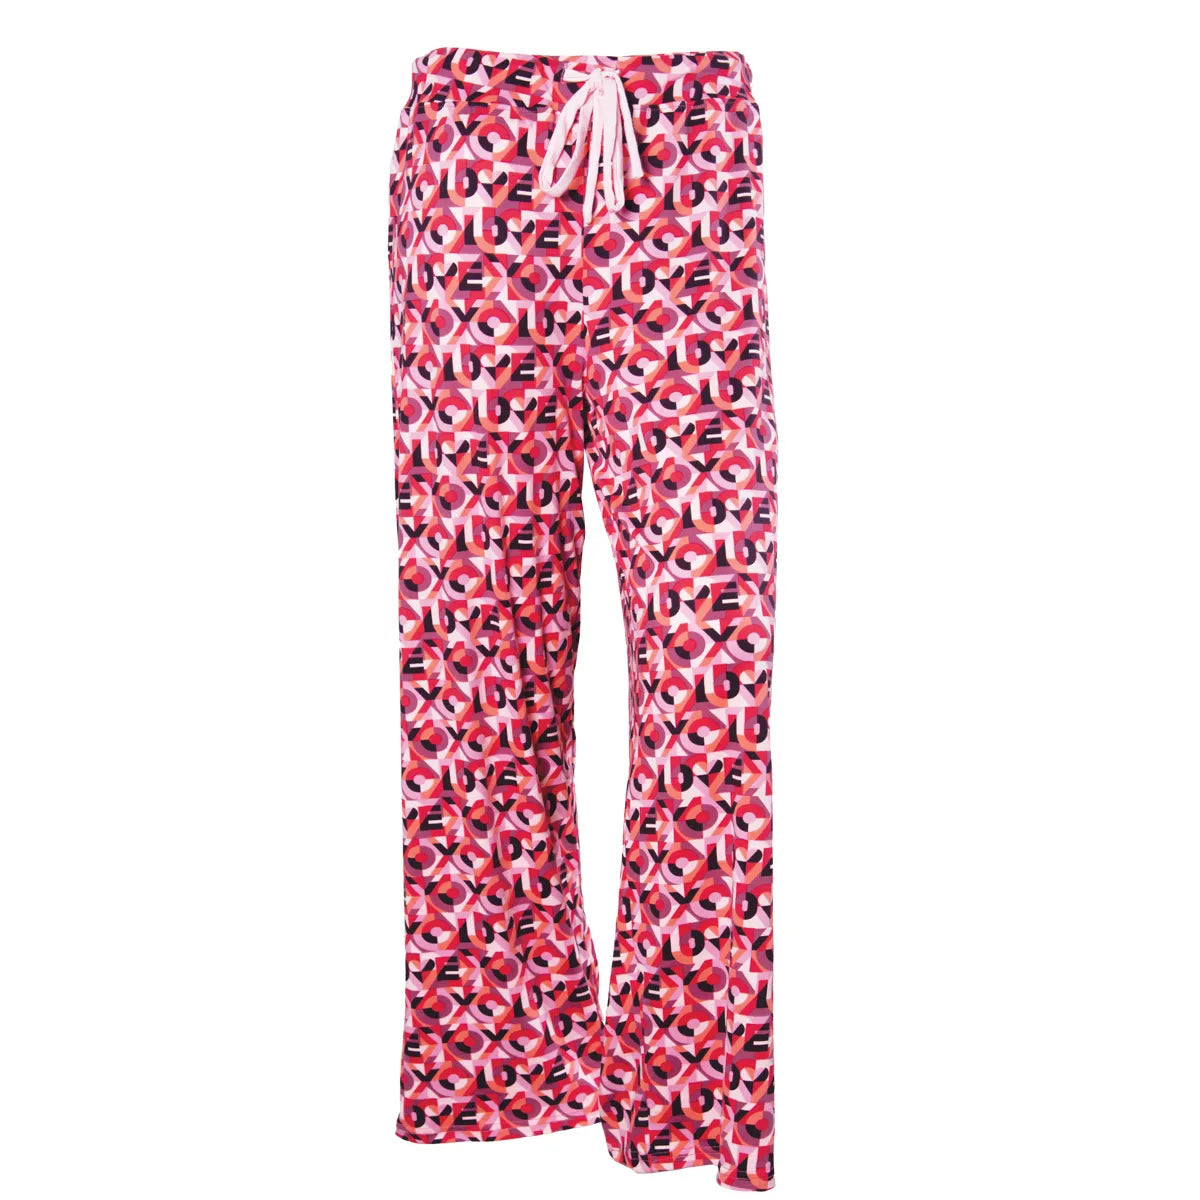 XOXO Pajama Pant (Small to 2X)